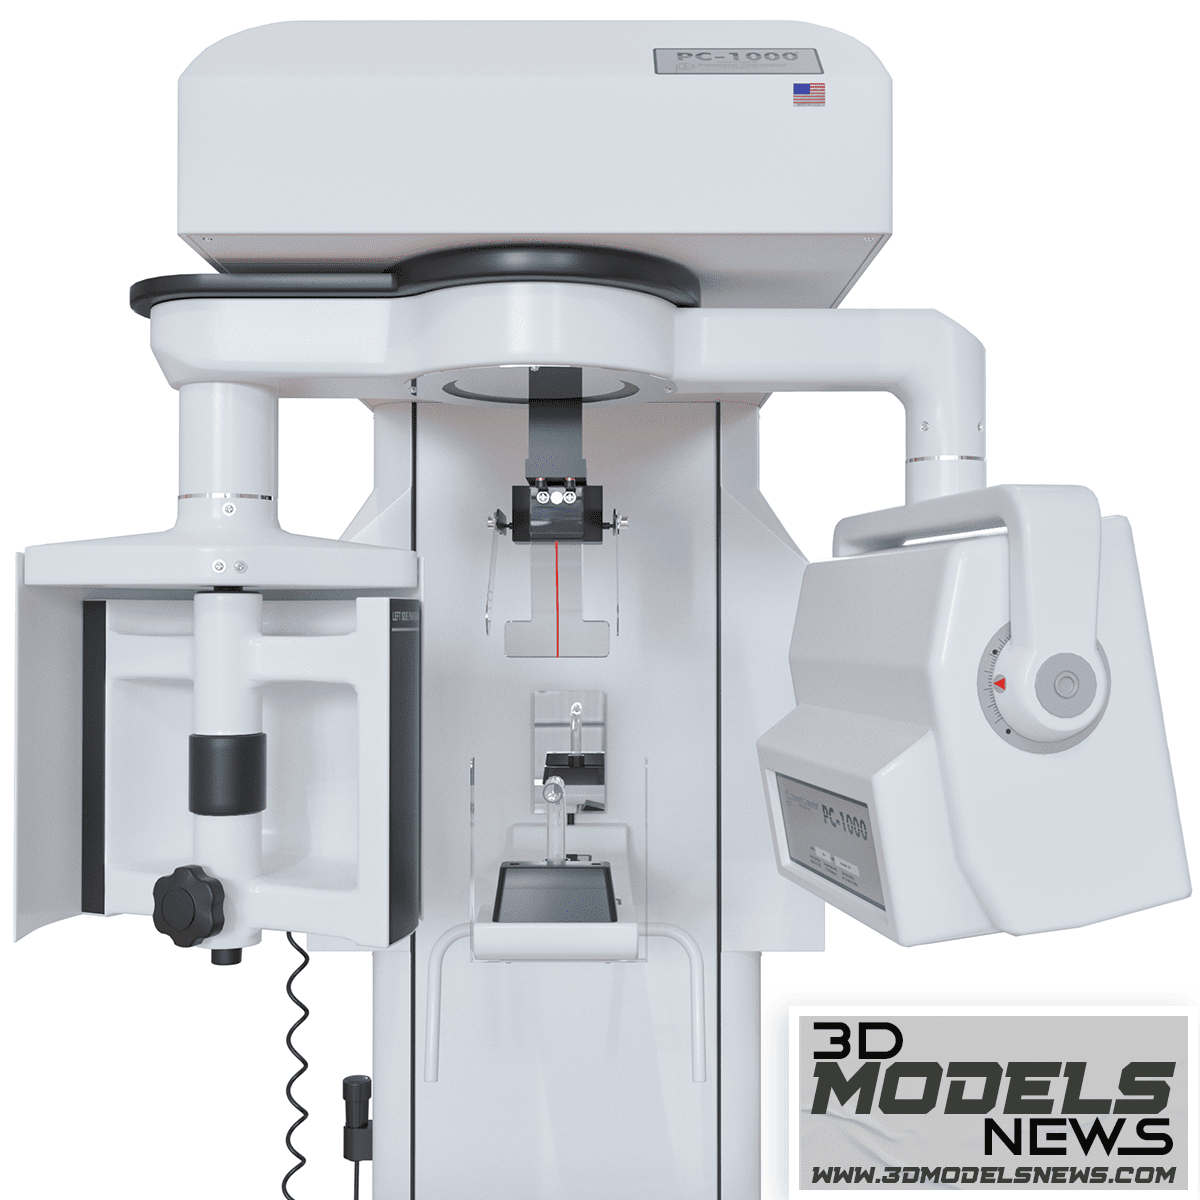 Dental X-rays model pc1000 1